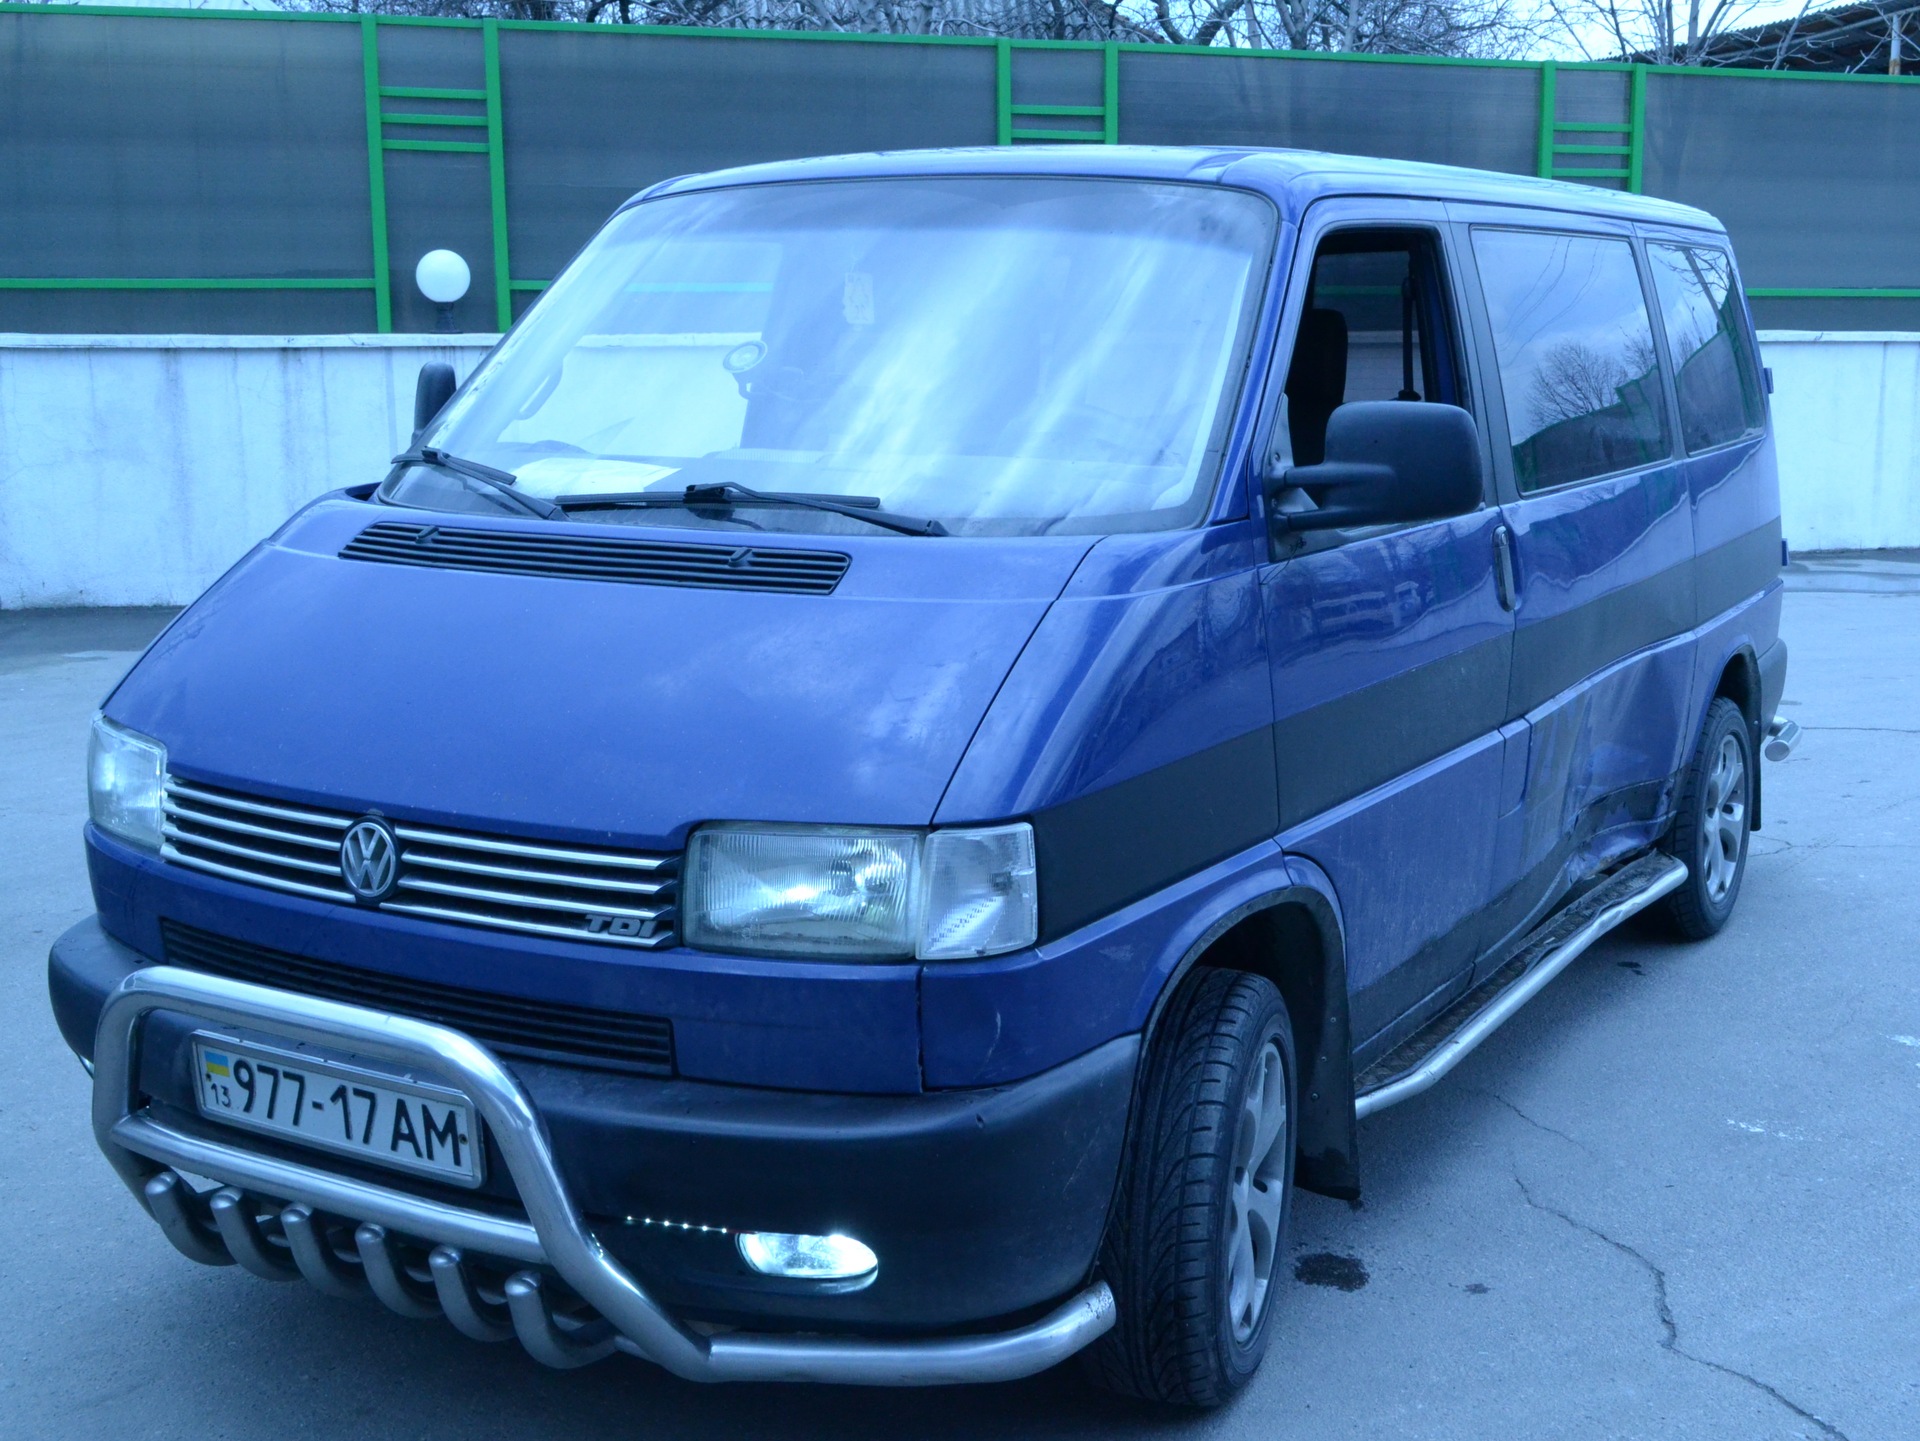 Купить т4 в брянске. Volkswagen t4 2000. Volkswagen Transporter t4 2000 года. Volkswagen Transporter t4 синий. Фолъксвагентранспор терт4.